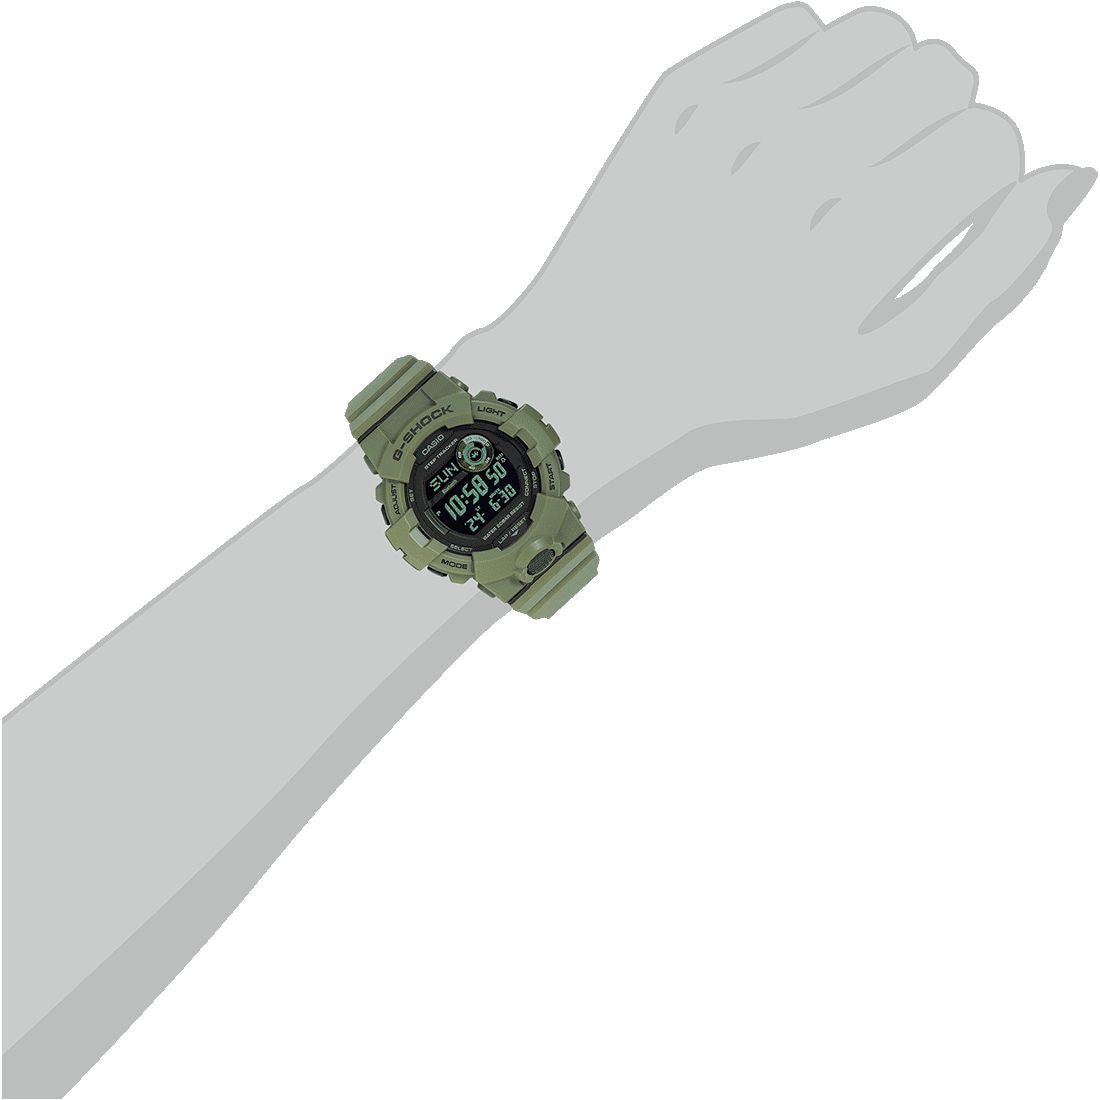 Orologio G-Shock GBD-800UC-3ER verde militare contapassi